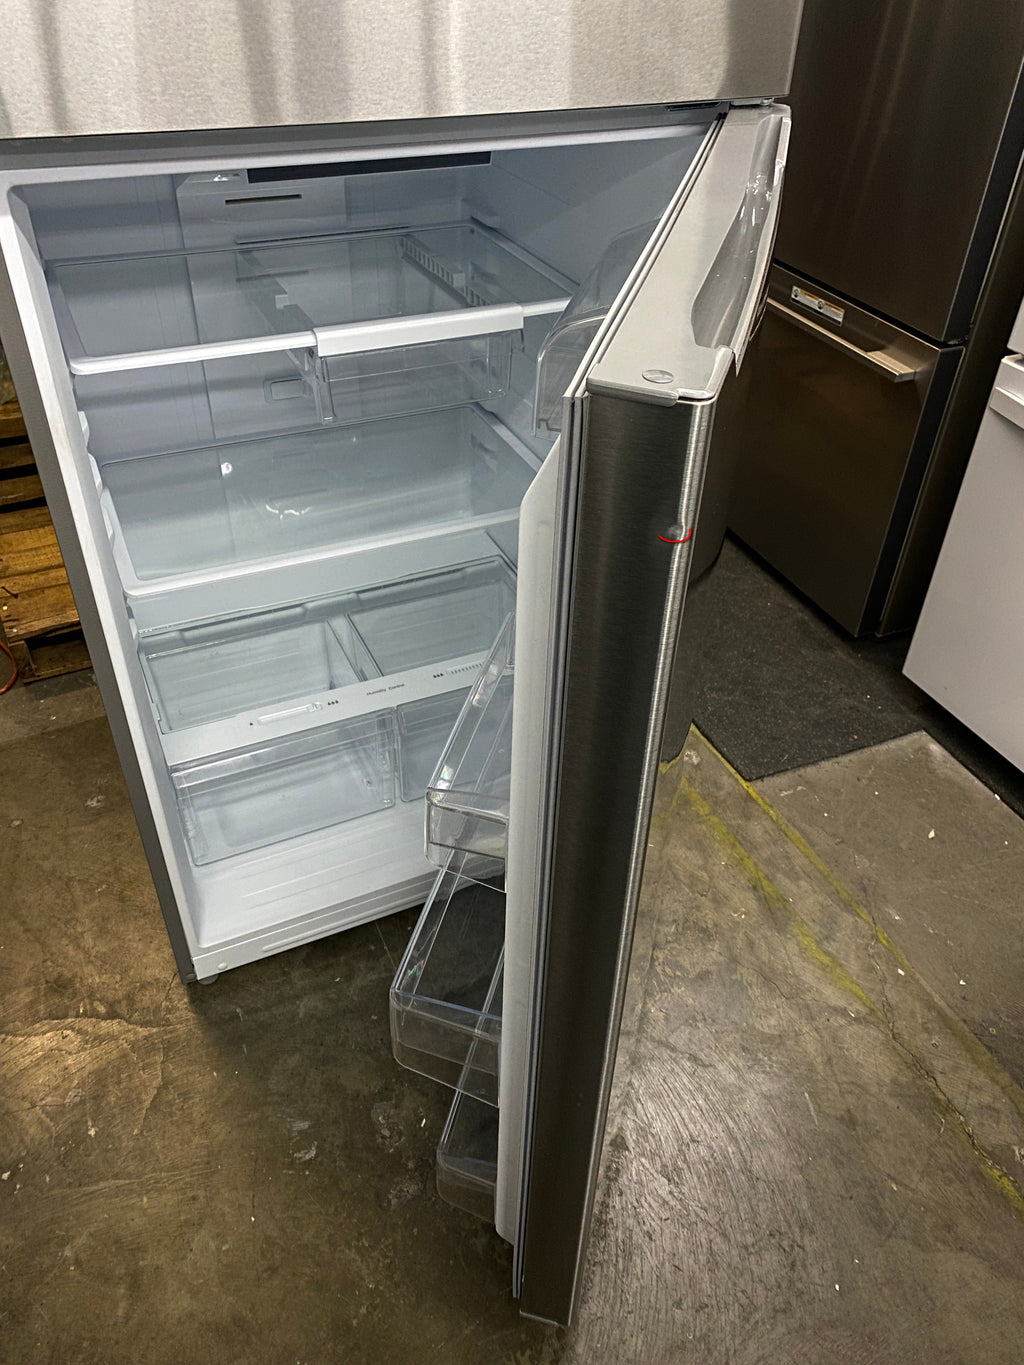 Insignia - 18 Cu. ft. Top-Freezer Refrigerator - White